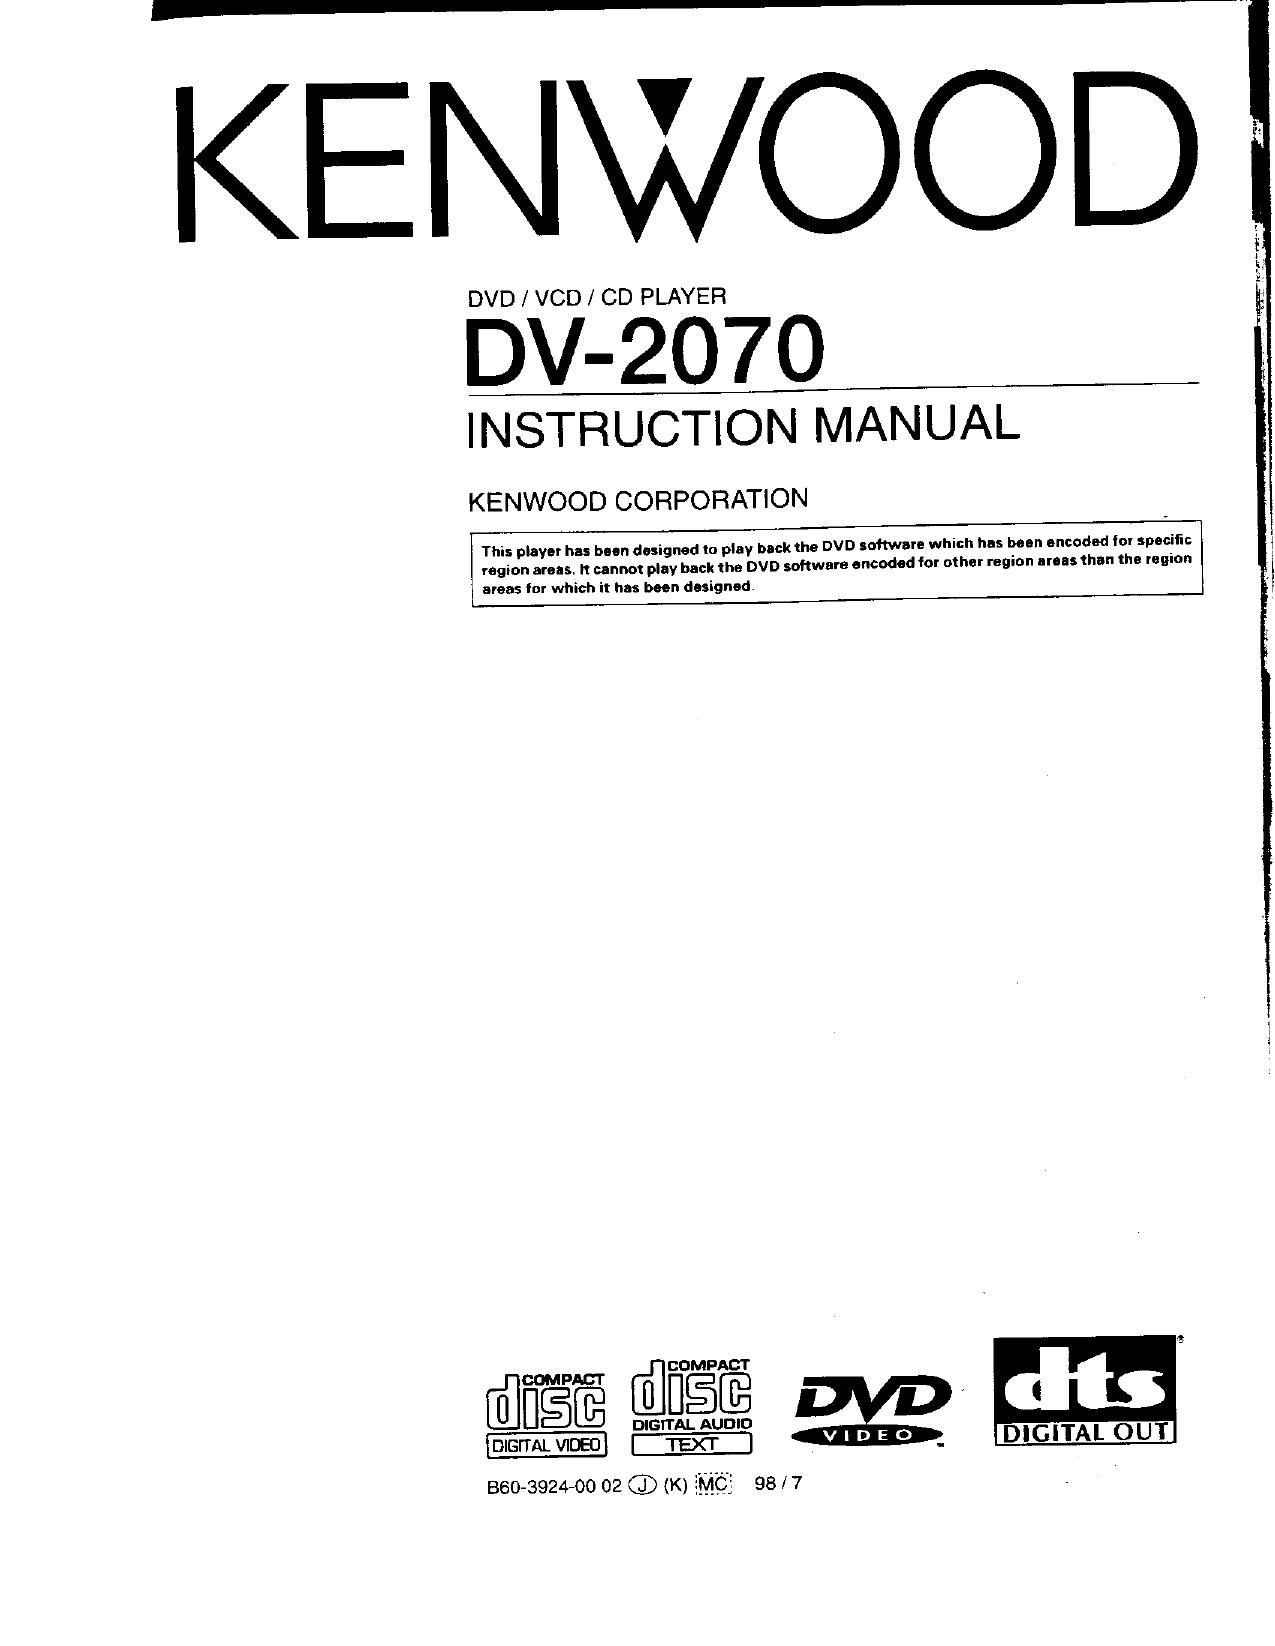 Kenwood DV 2070 Owners Manual